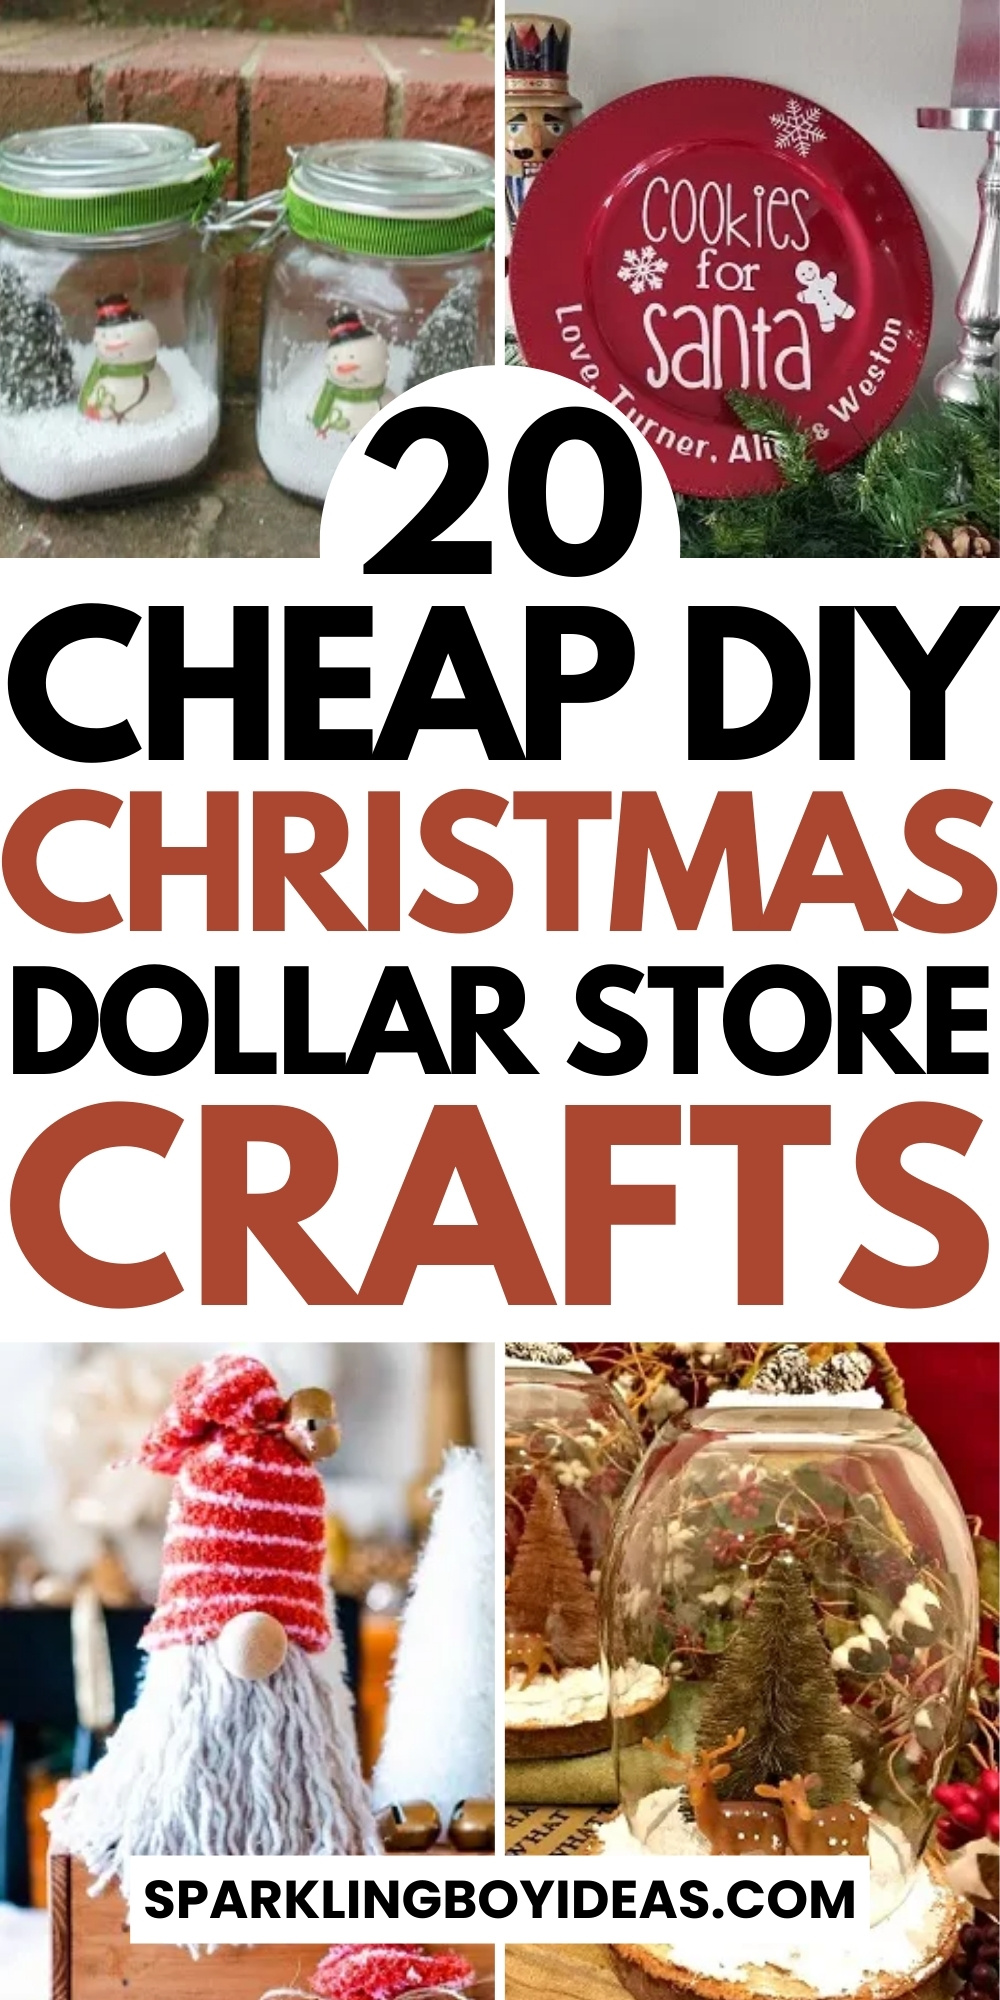 20 Easy Dollar Store Christmas Crafts - Sparkling Boy Ideas